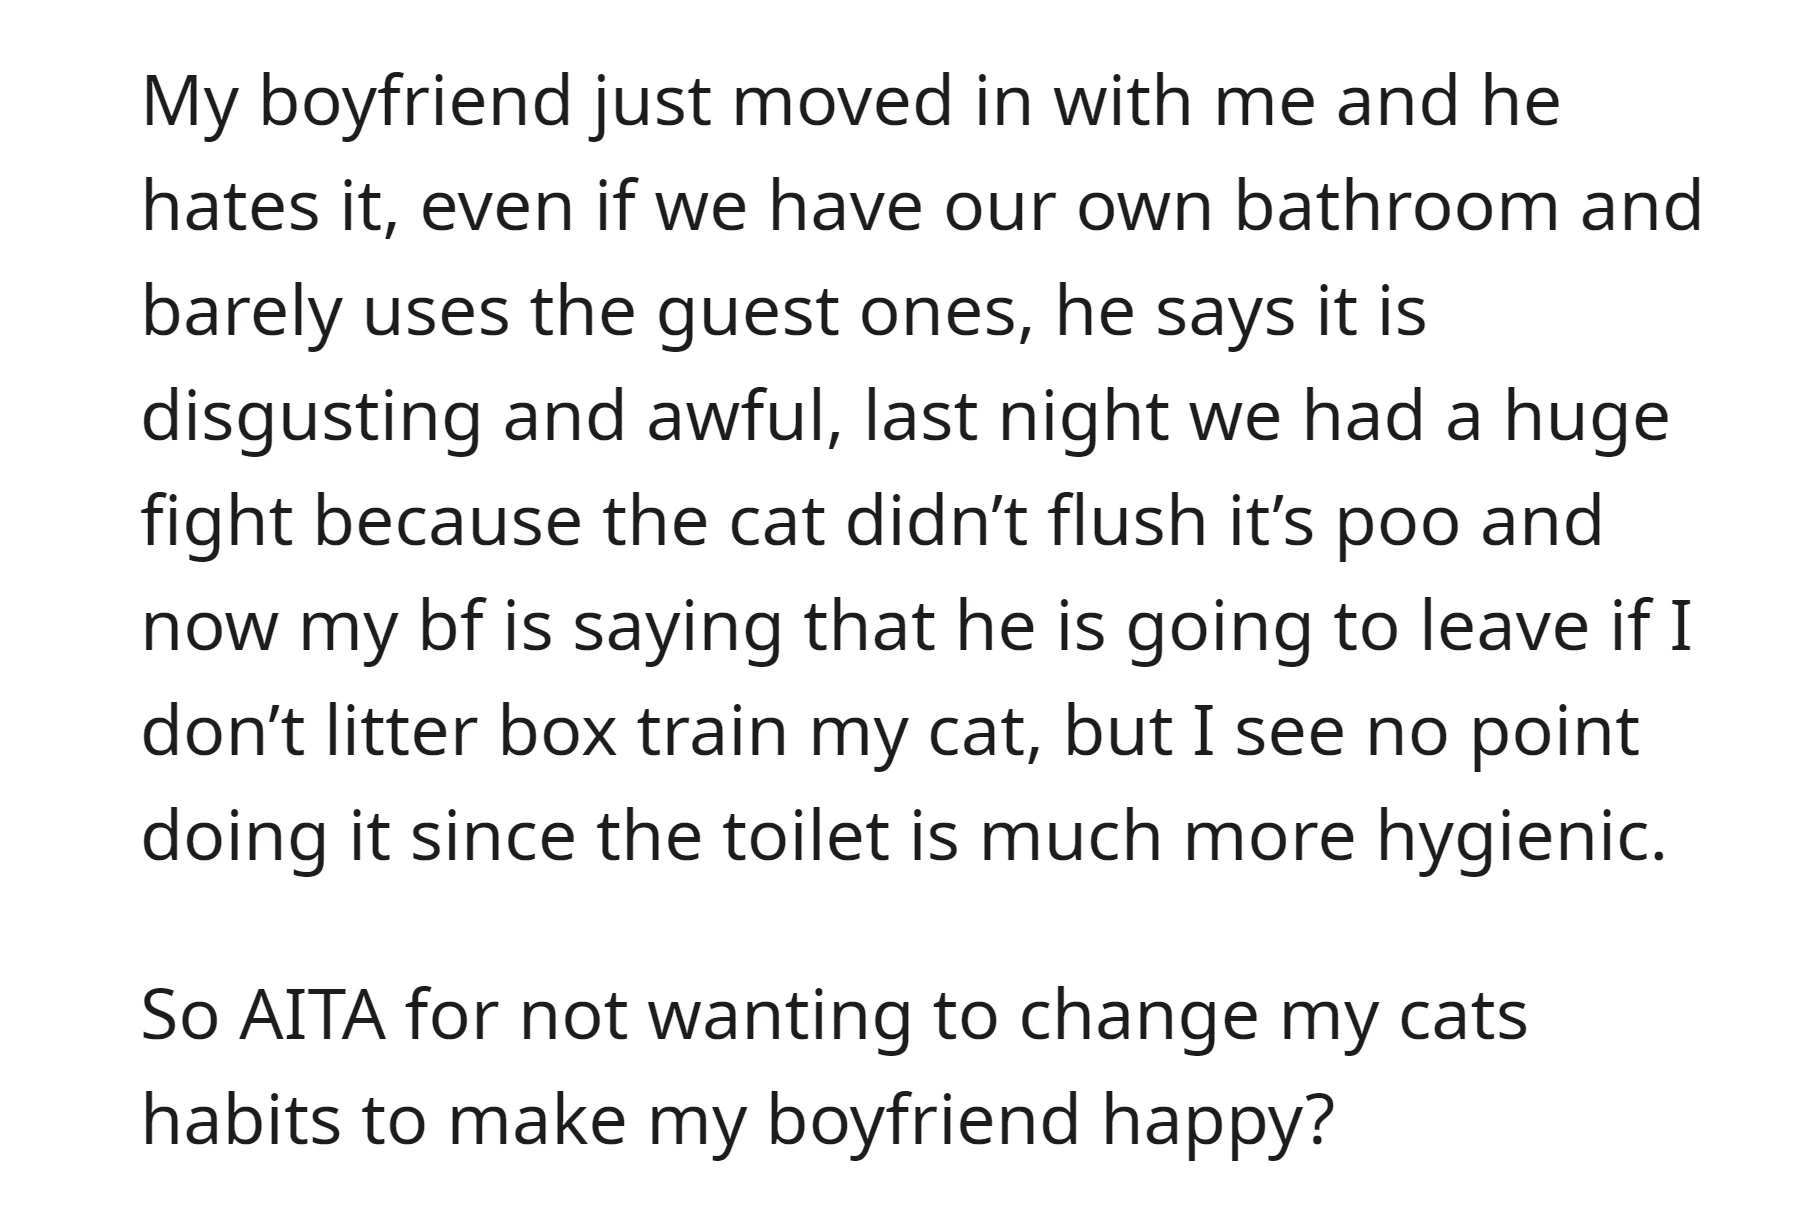 OP's boyfriend finds the cat's toilet habits disgusting